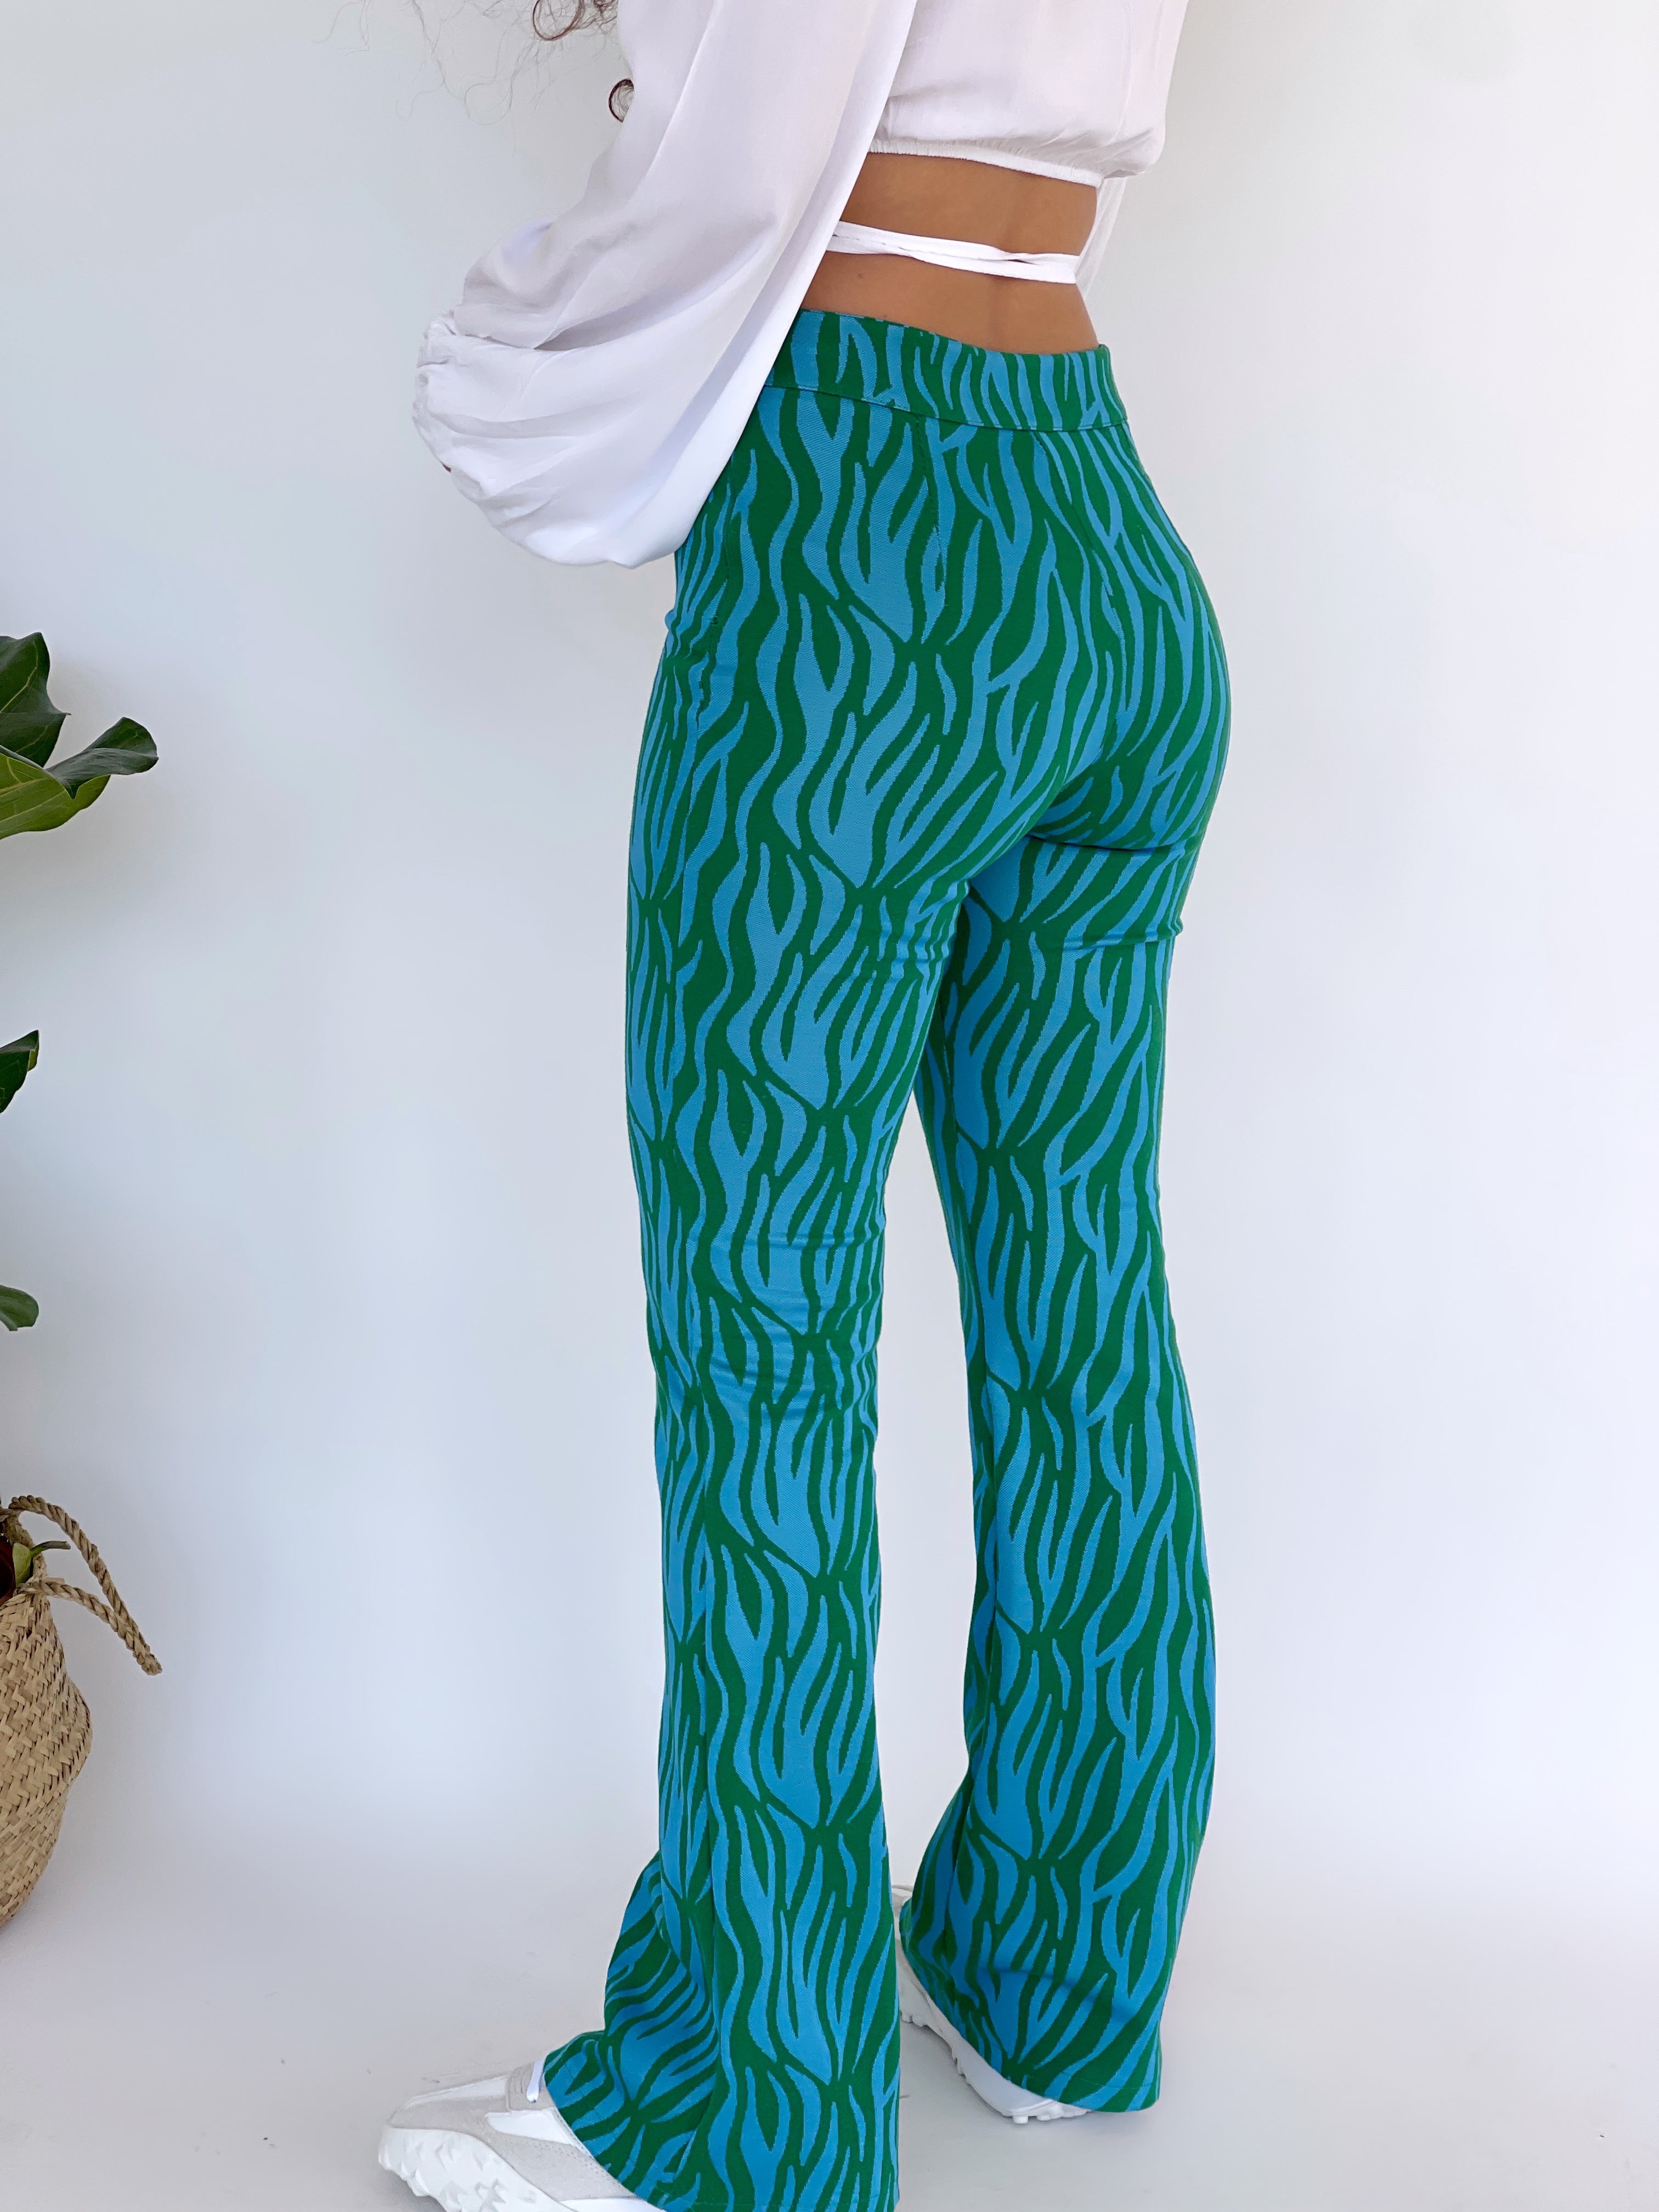 ZEBRA PRINT FLARE TROUSERS IN LIGHT BLUE & GREEN - Trousers - LE TRÉ